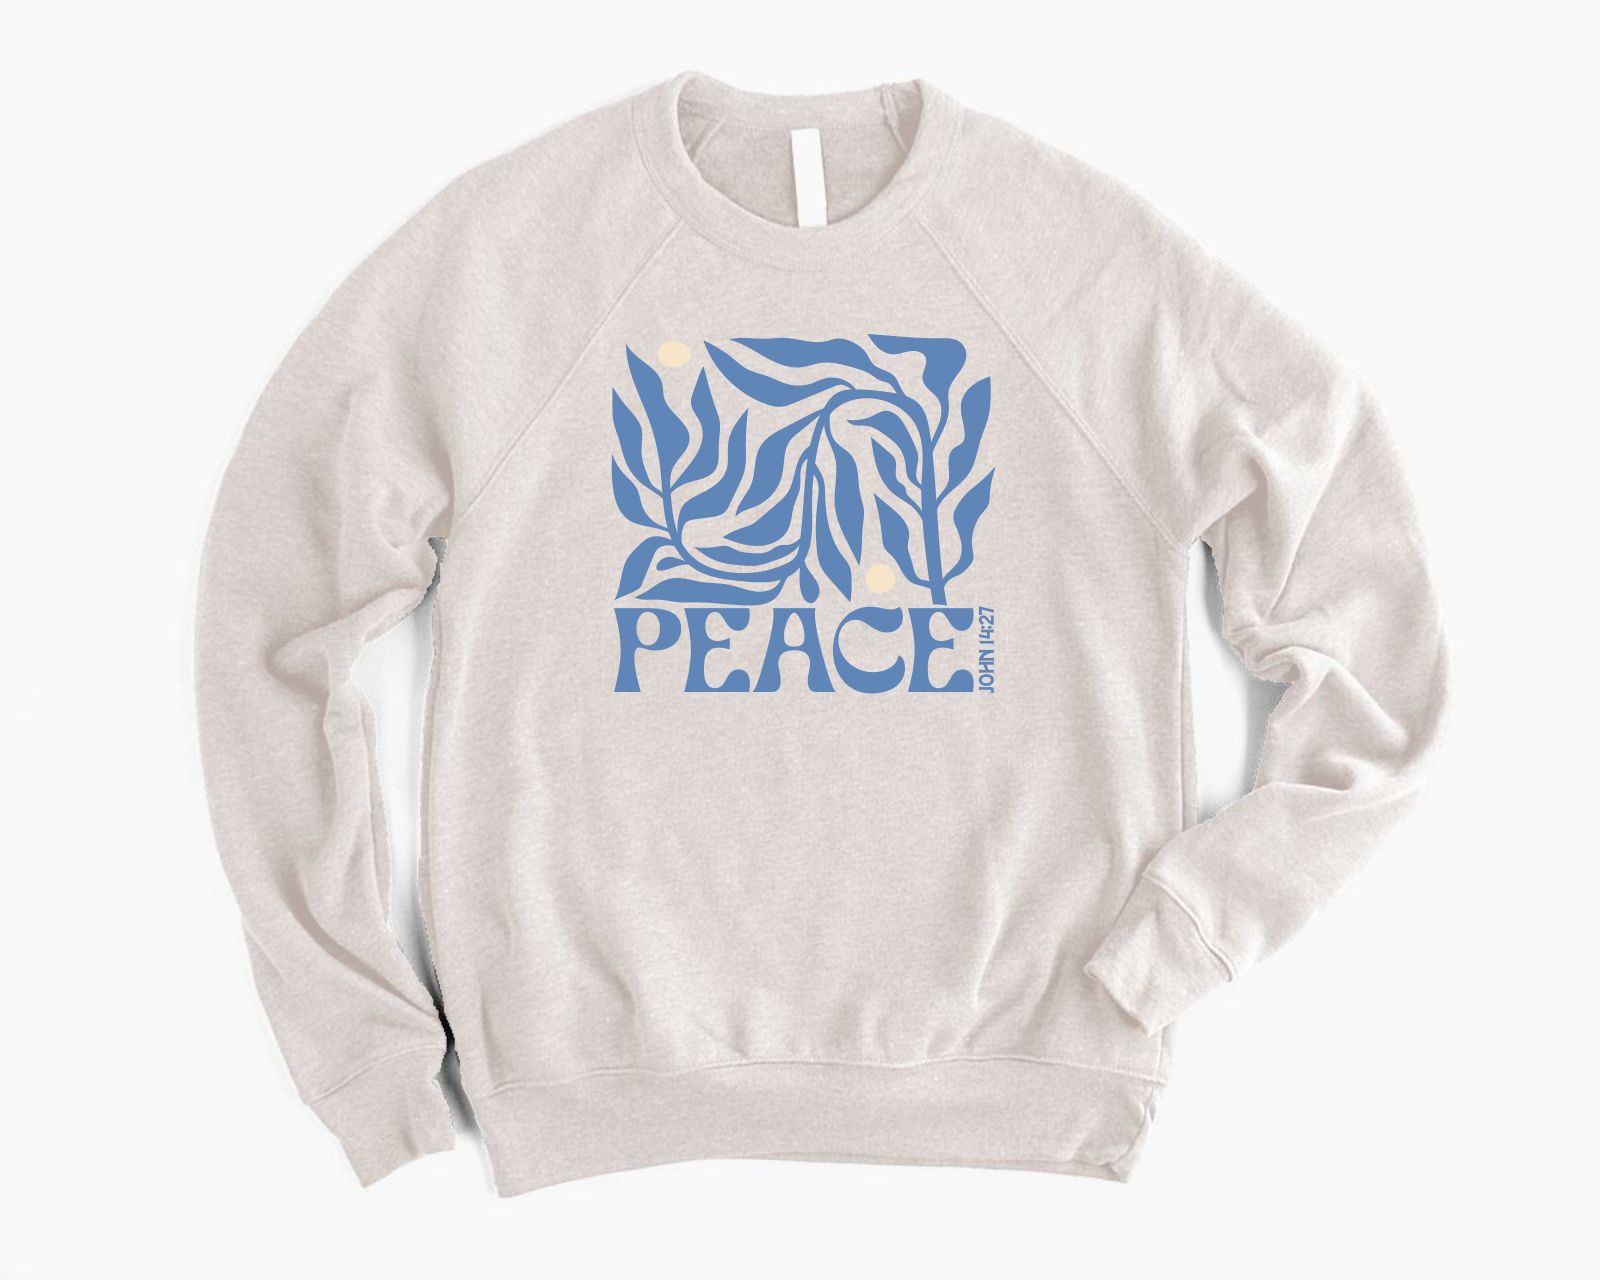 Peace John 14:27 Botanical Christian Sweatshirt for Women in unisex raglan  style with blue floral theme